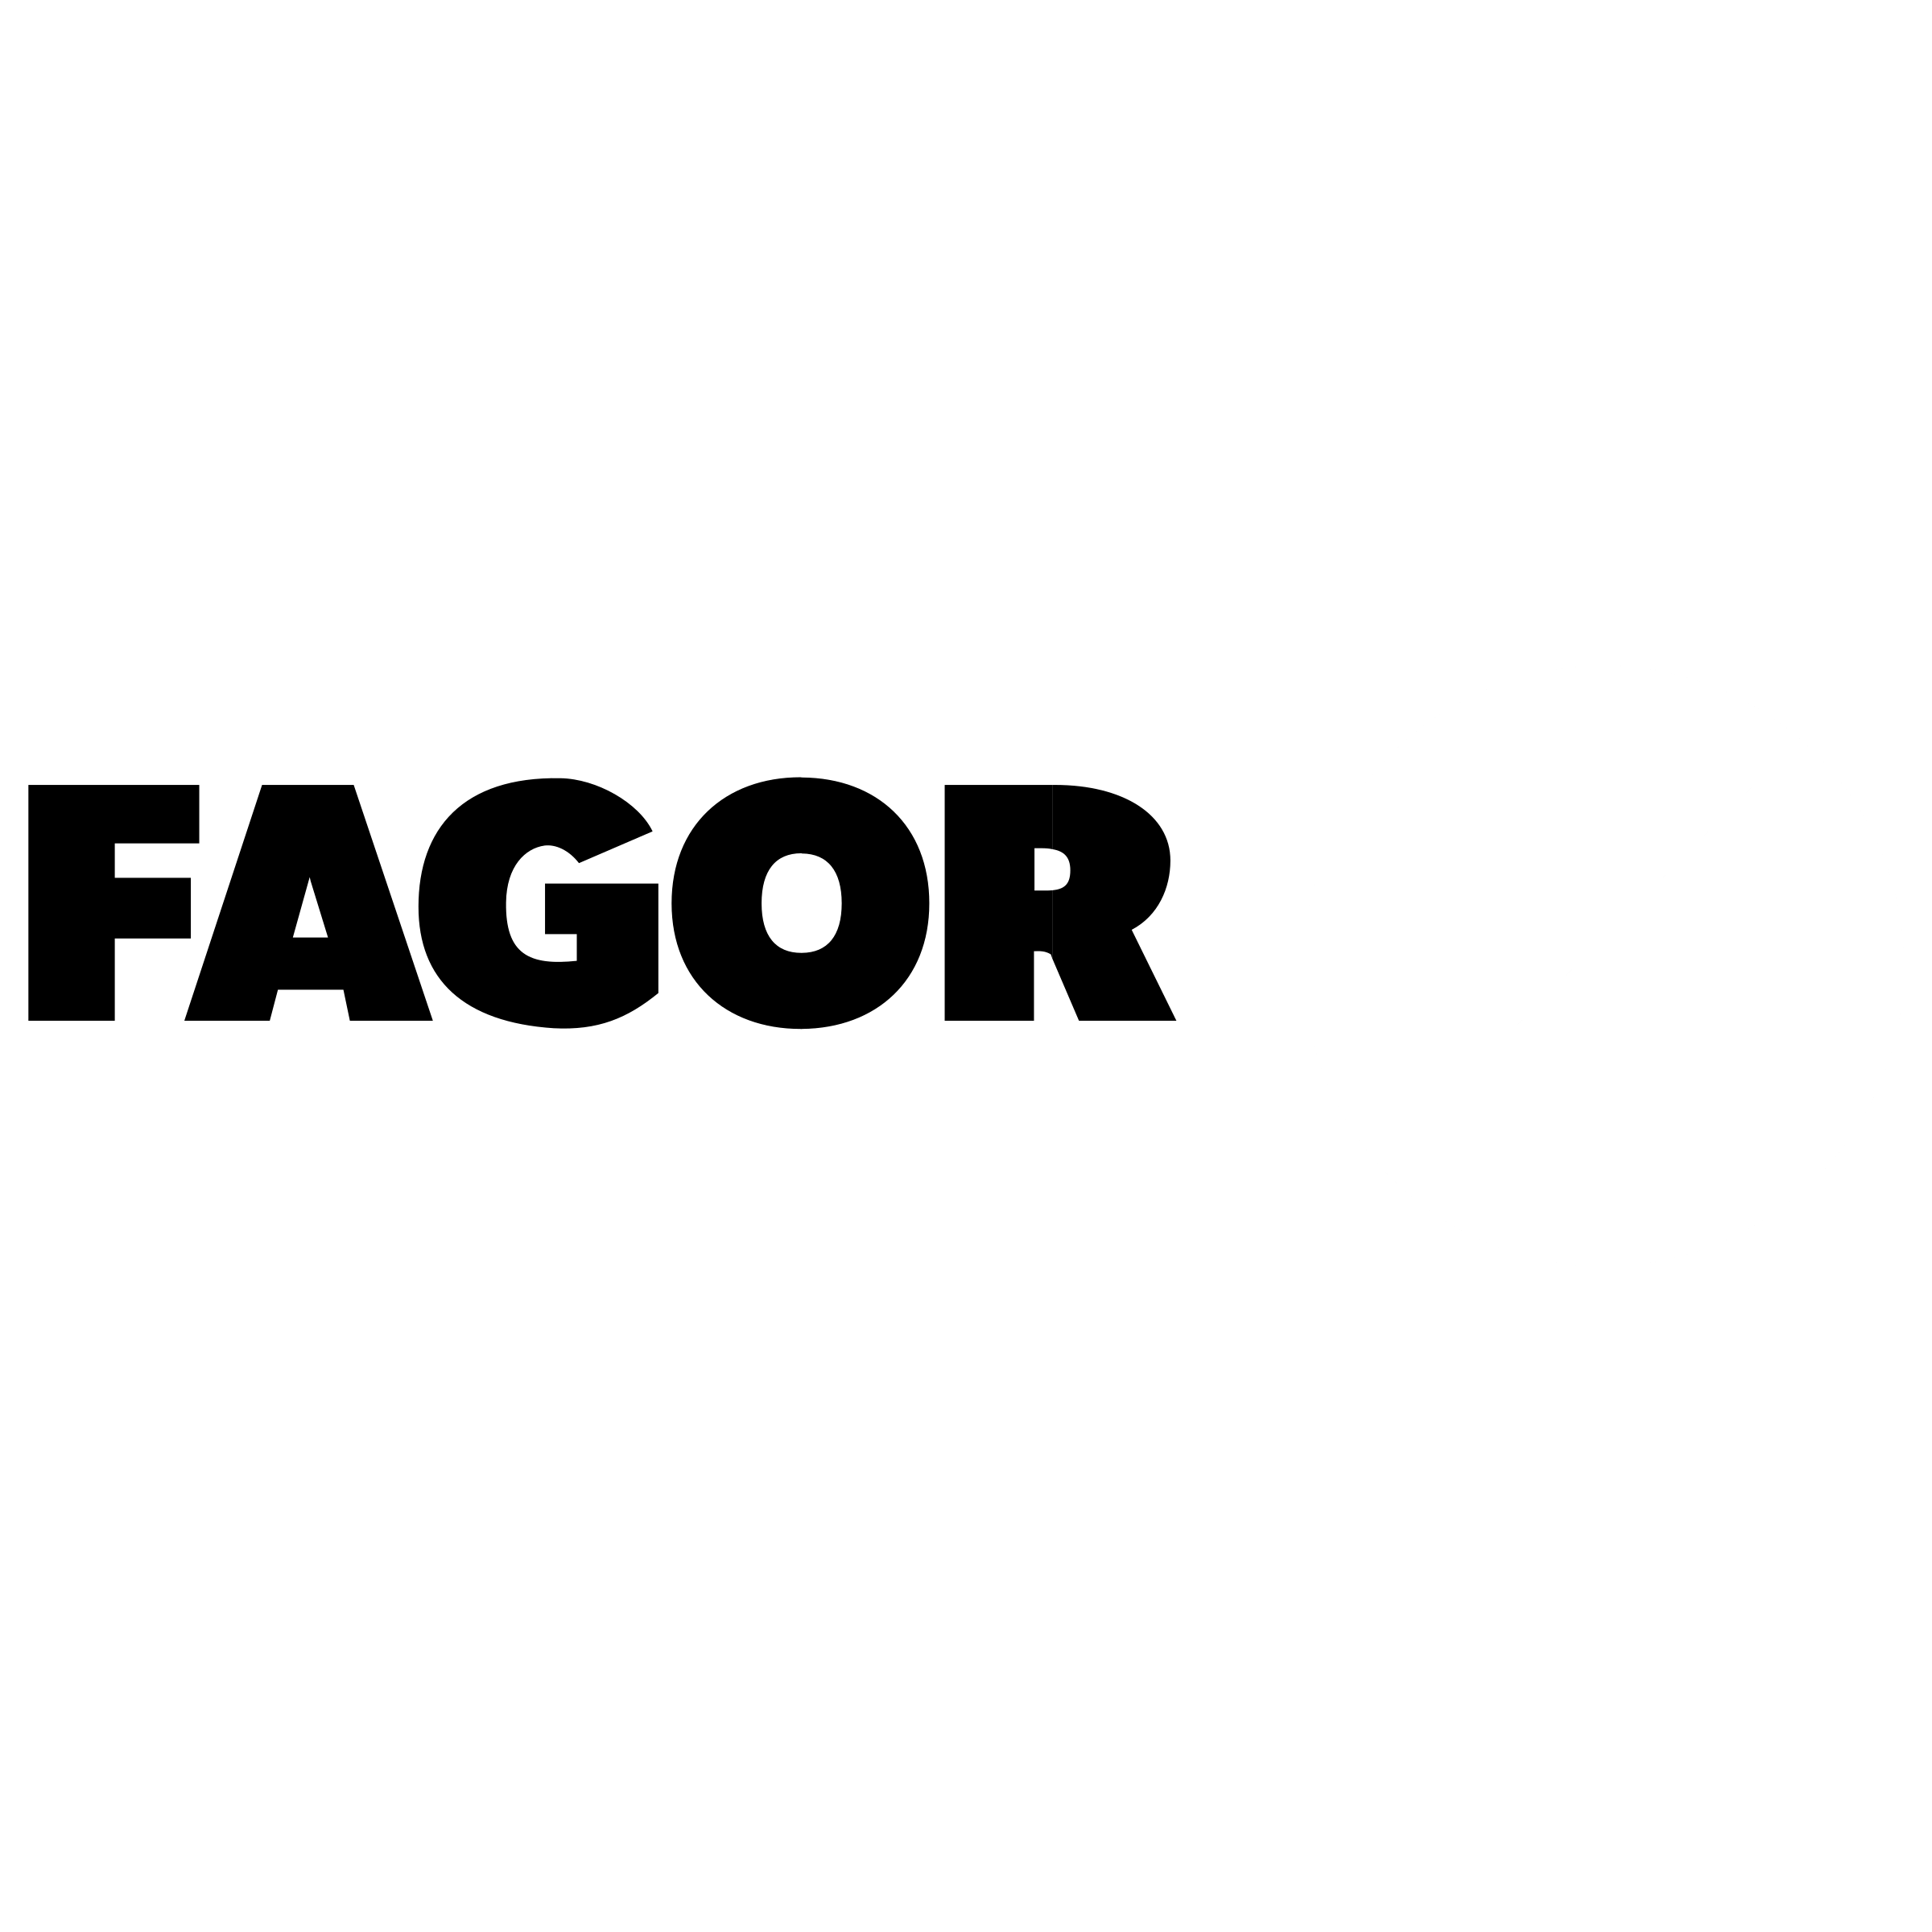 Fagor Logo - Fagor Logo PNG Transparent & SVG Vector